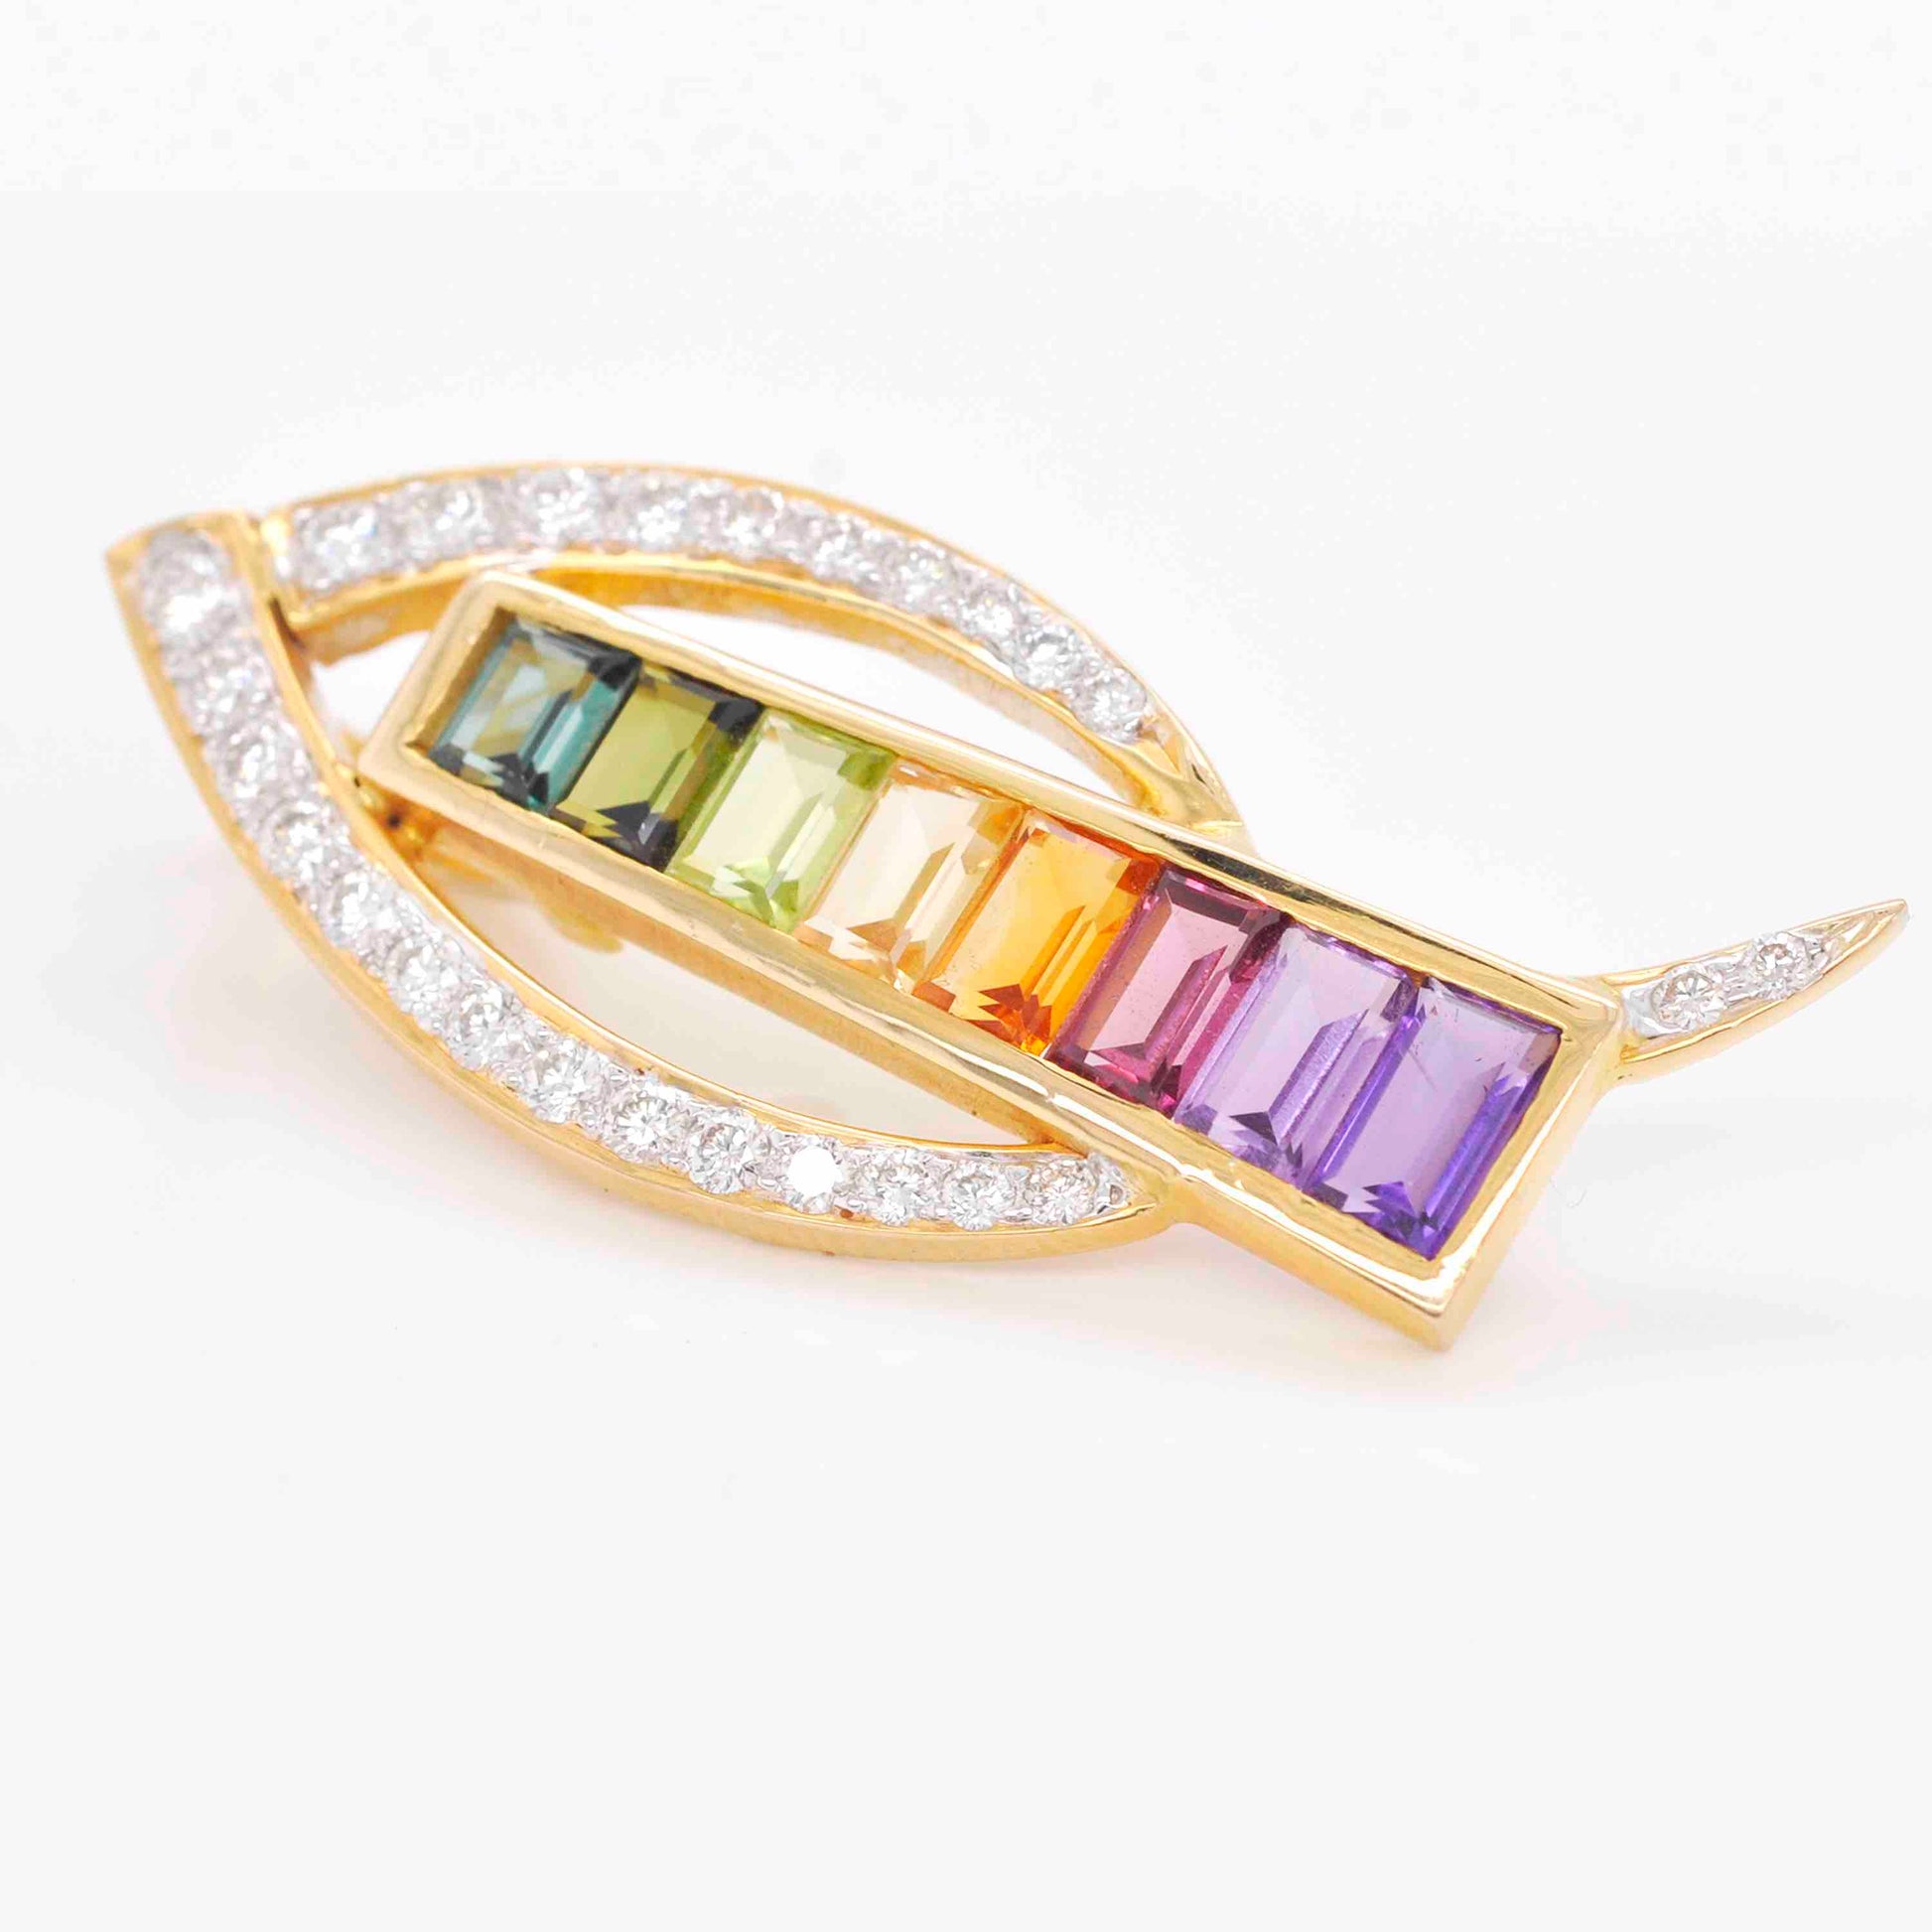 Colorful diamond pendant